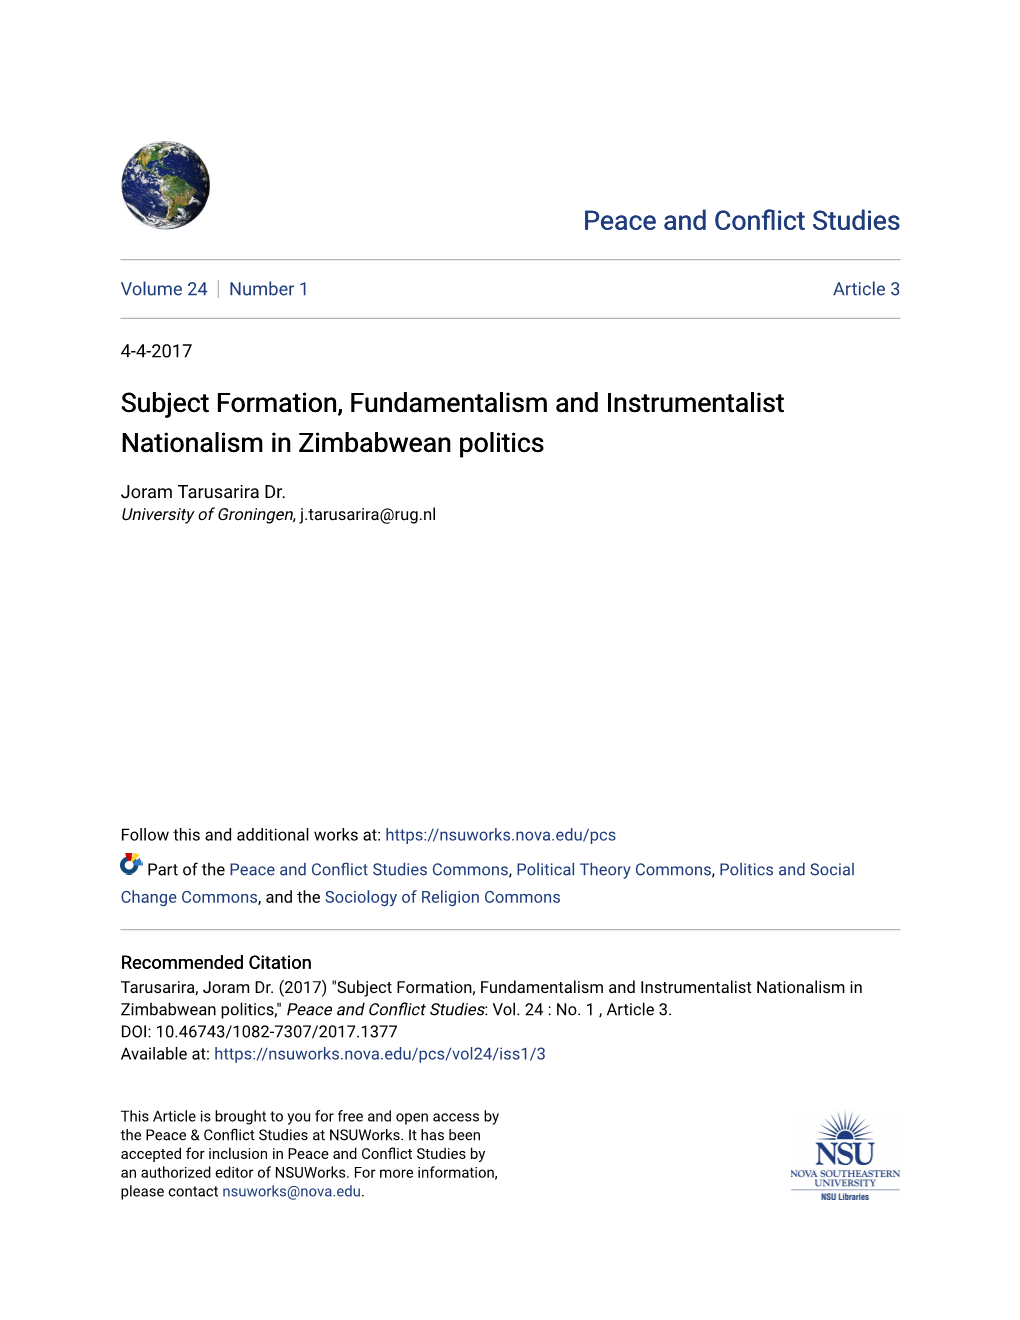 Subject Formation, Fundamentalism and Instrumentalist Nationalism in Zimbabwean Politics